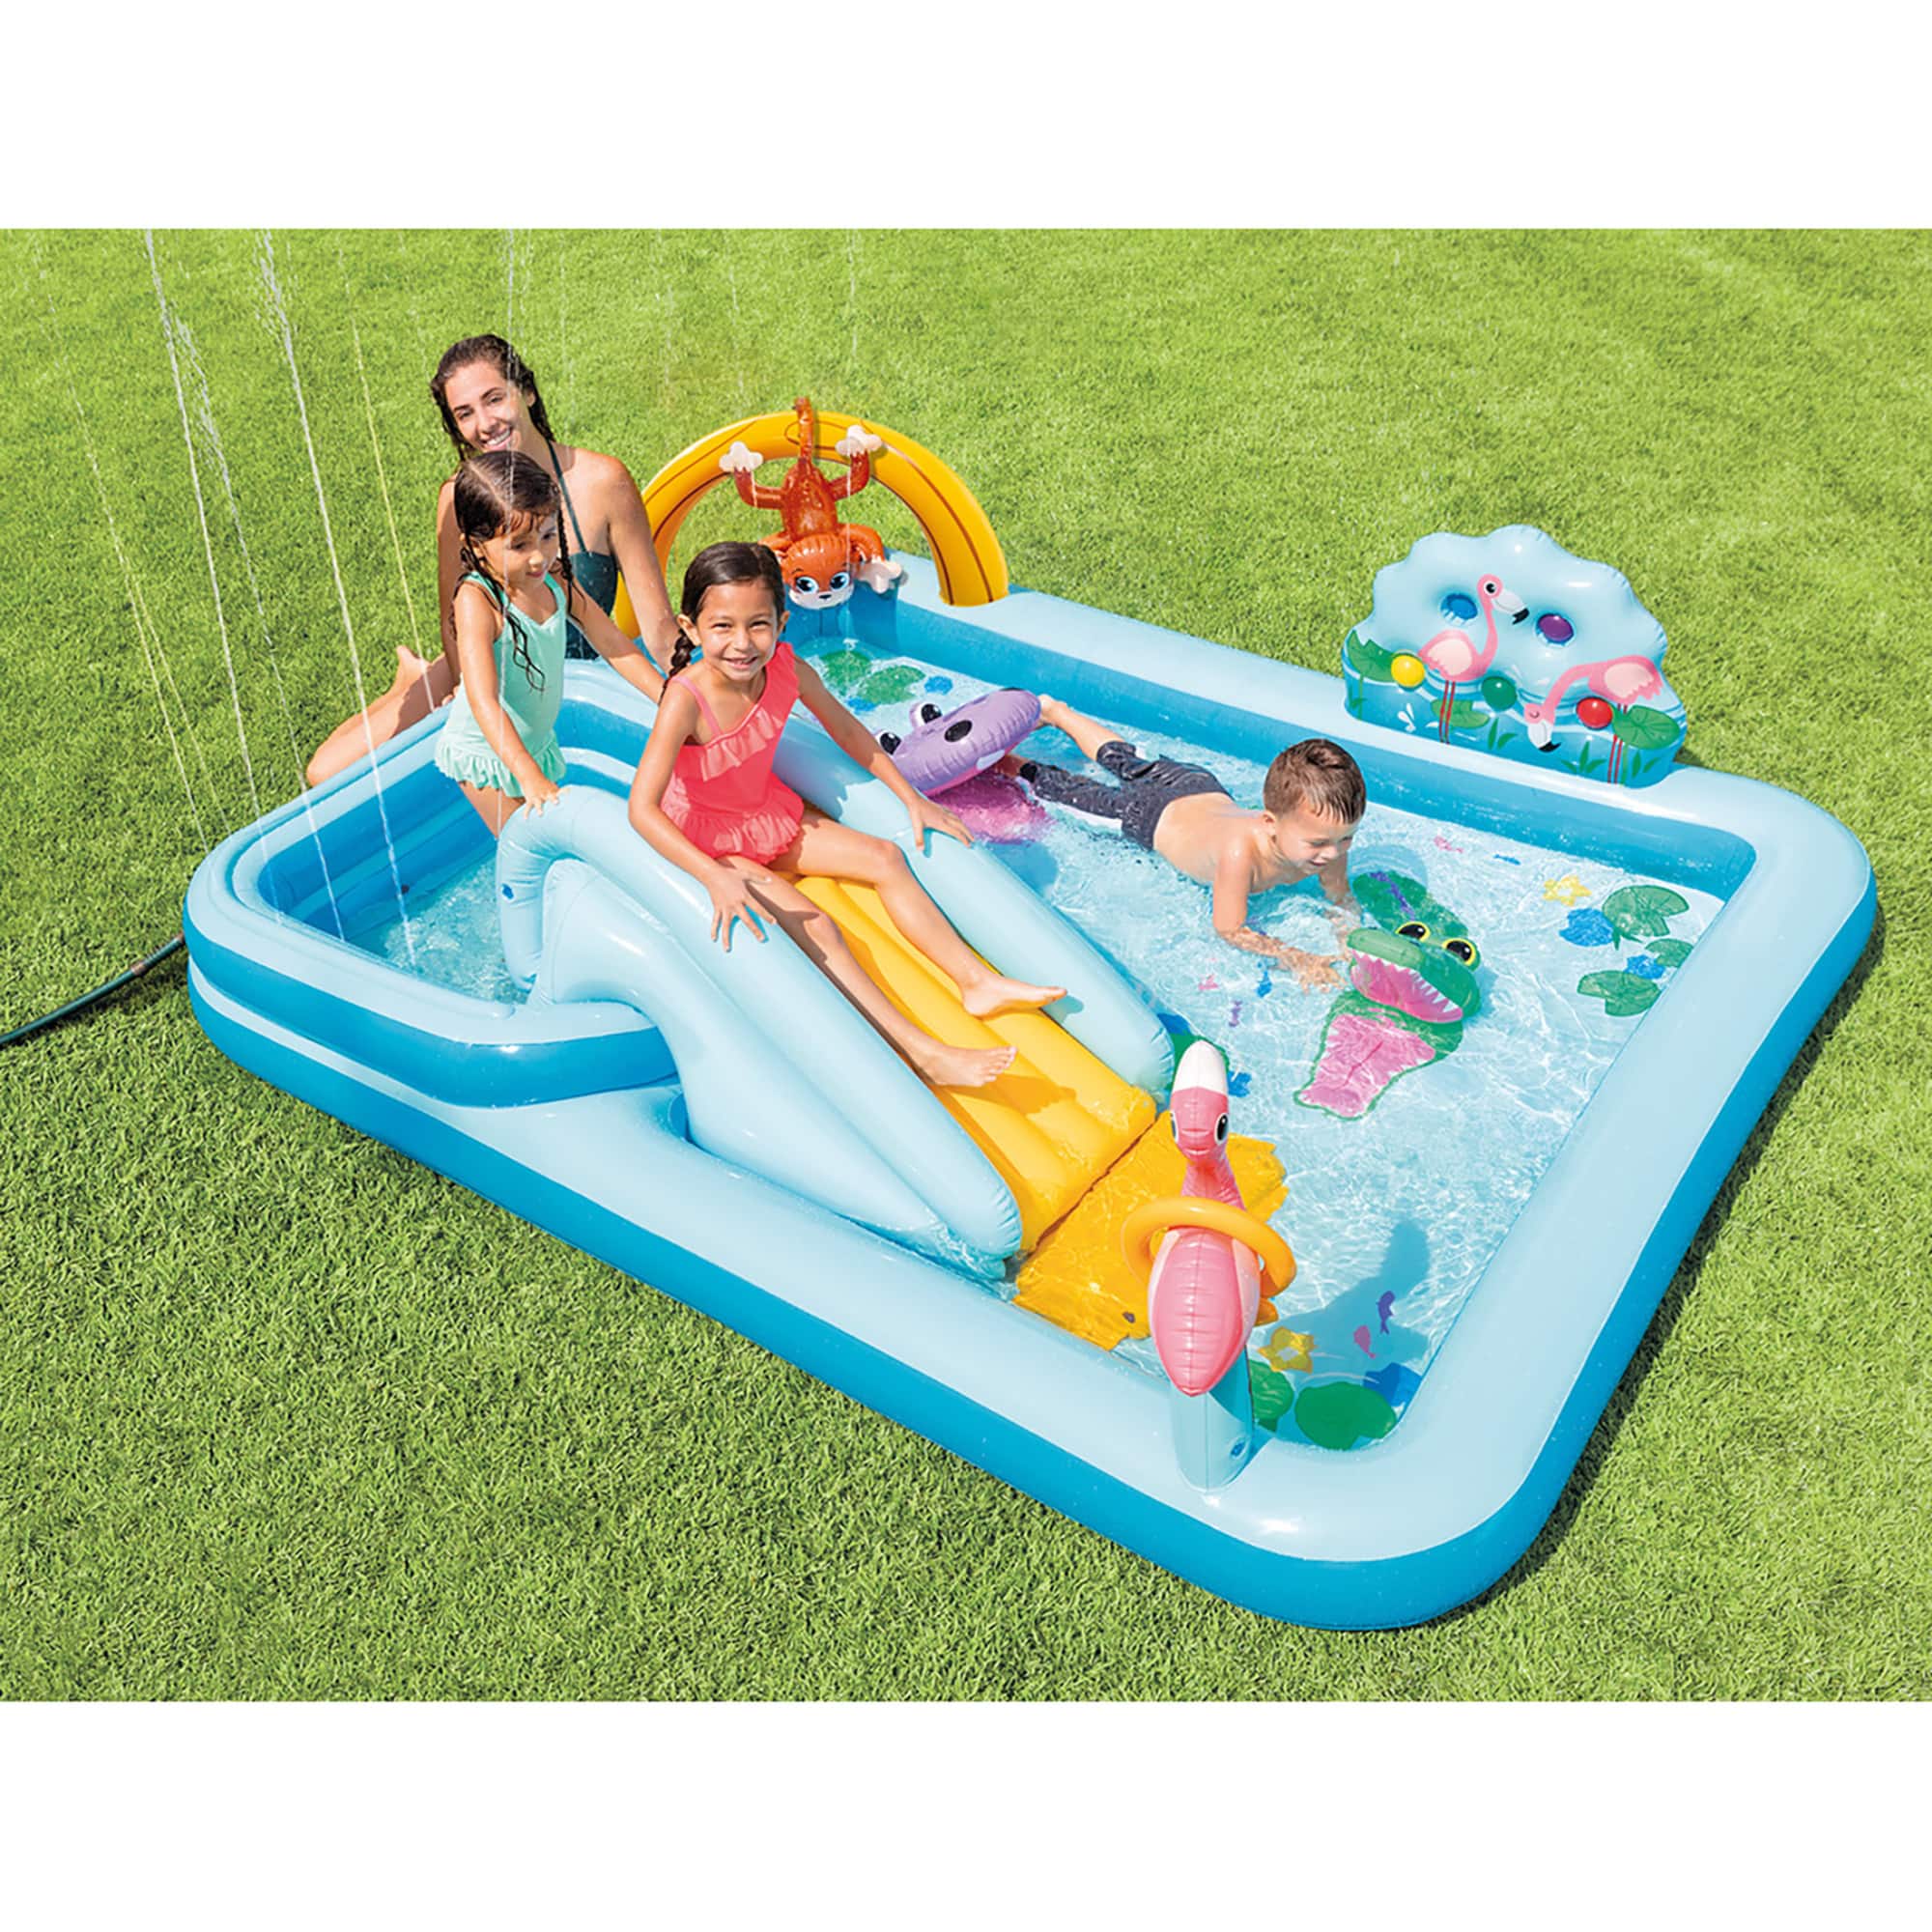 Intex Jungle Adventure Inflatable Pool Play Center